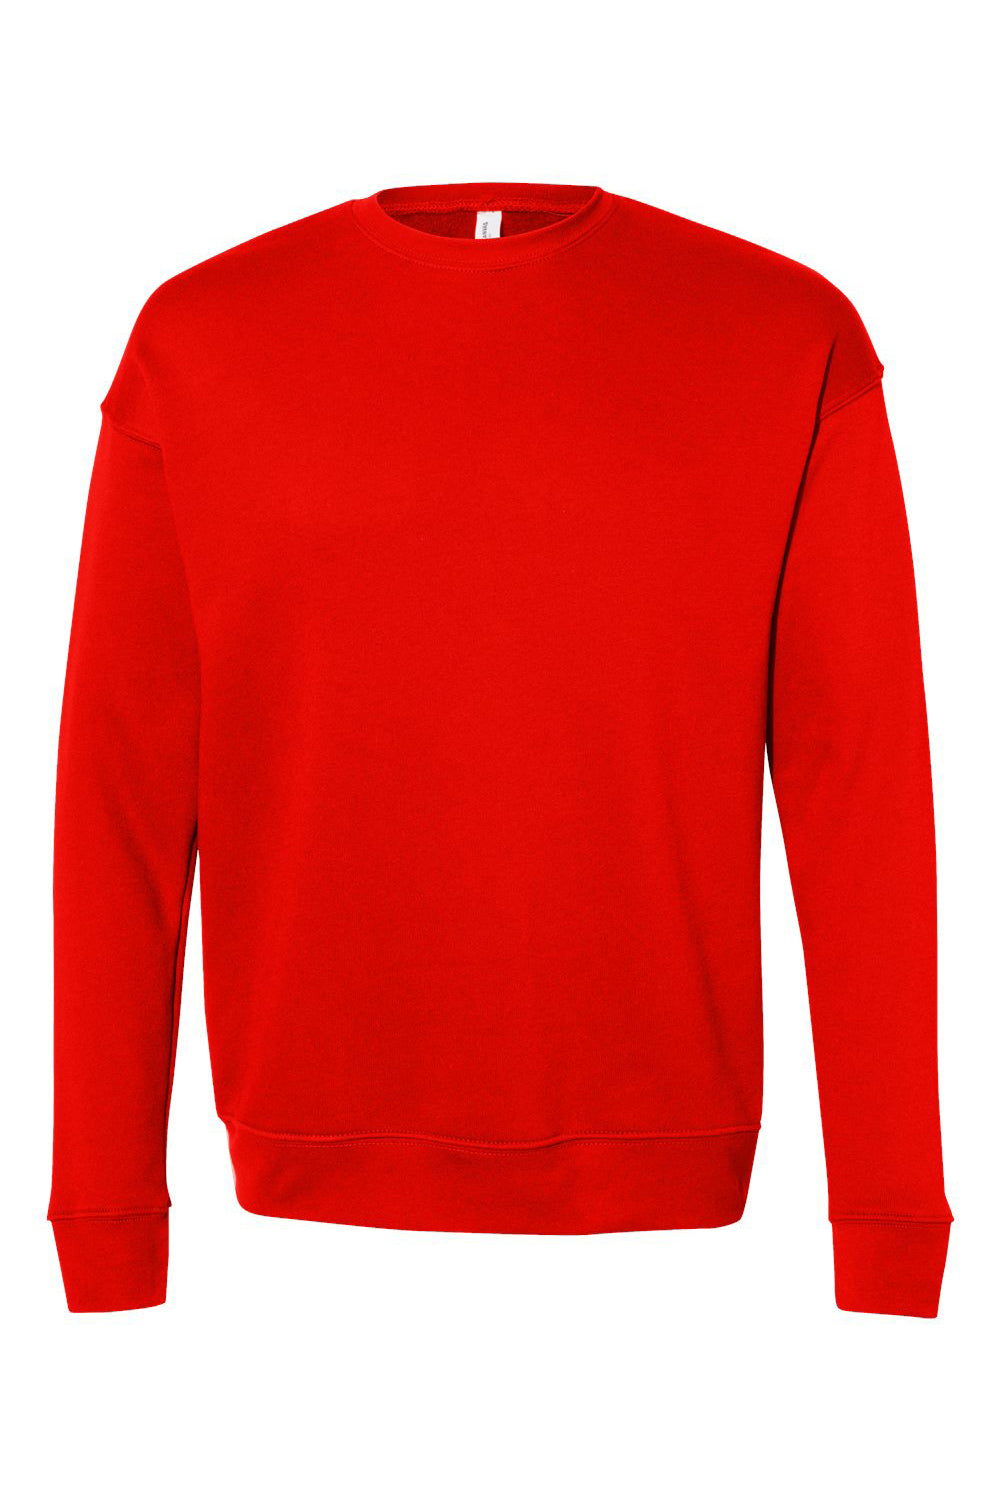 Bella + Canvas BC3945/3945 Mens Fleece Crewneck Sweatshirt Poppy Red Flat Front